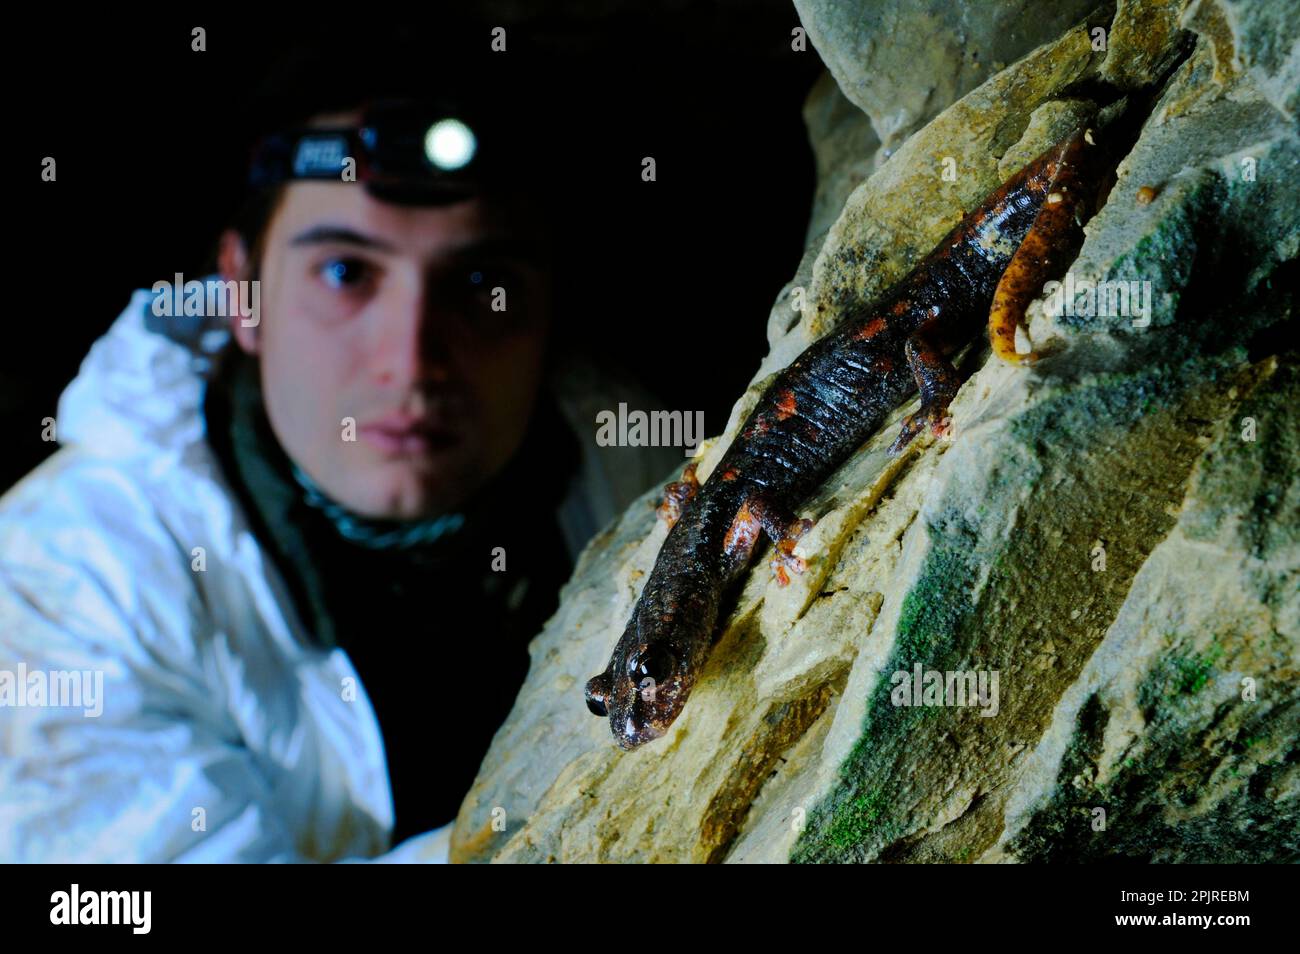 Grotta Italiana Salamander (Speleomantes italicus) adulto, guardato dallo speleologo in grotta, Italia Foto Stock